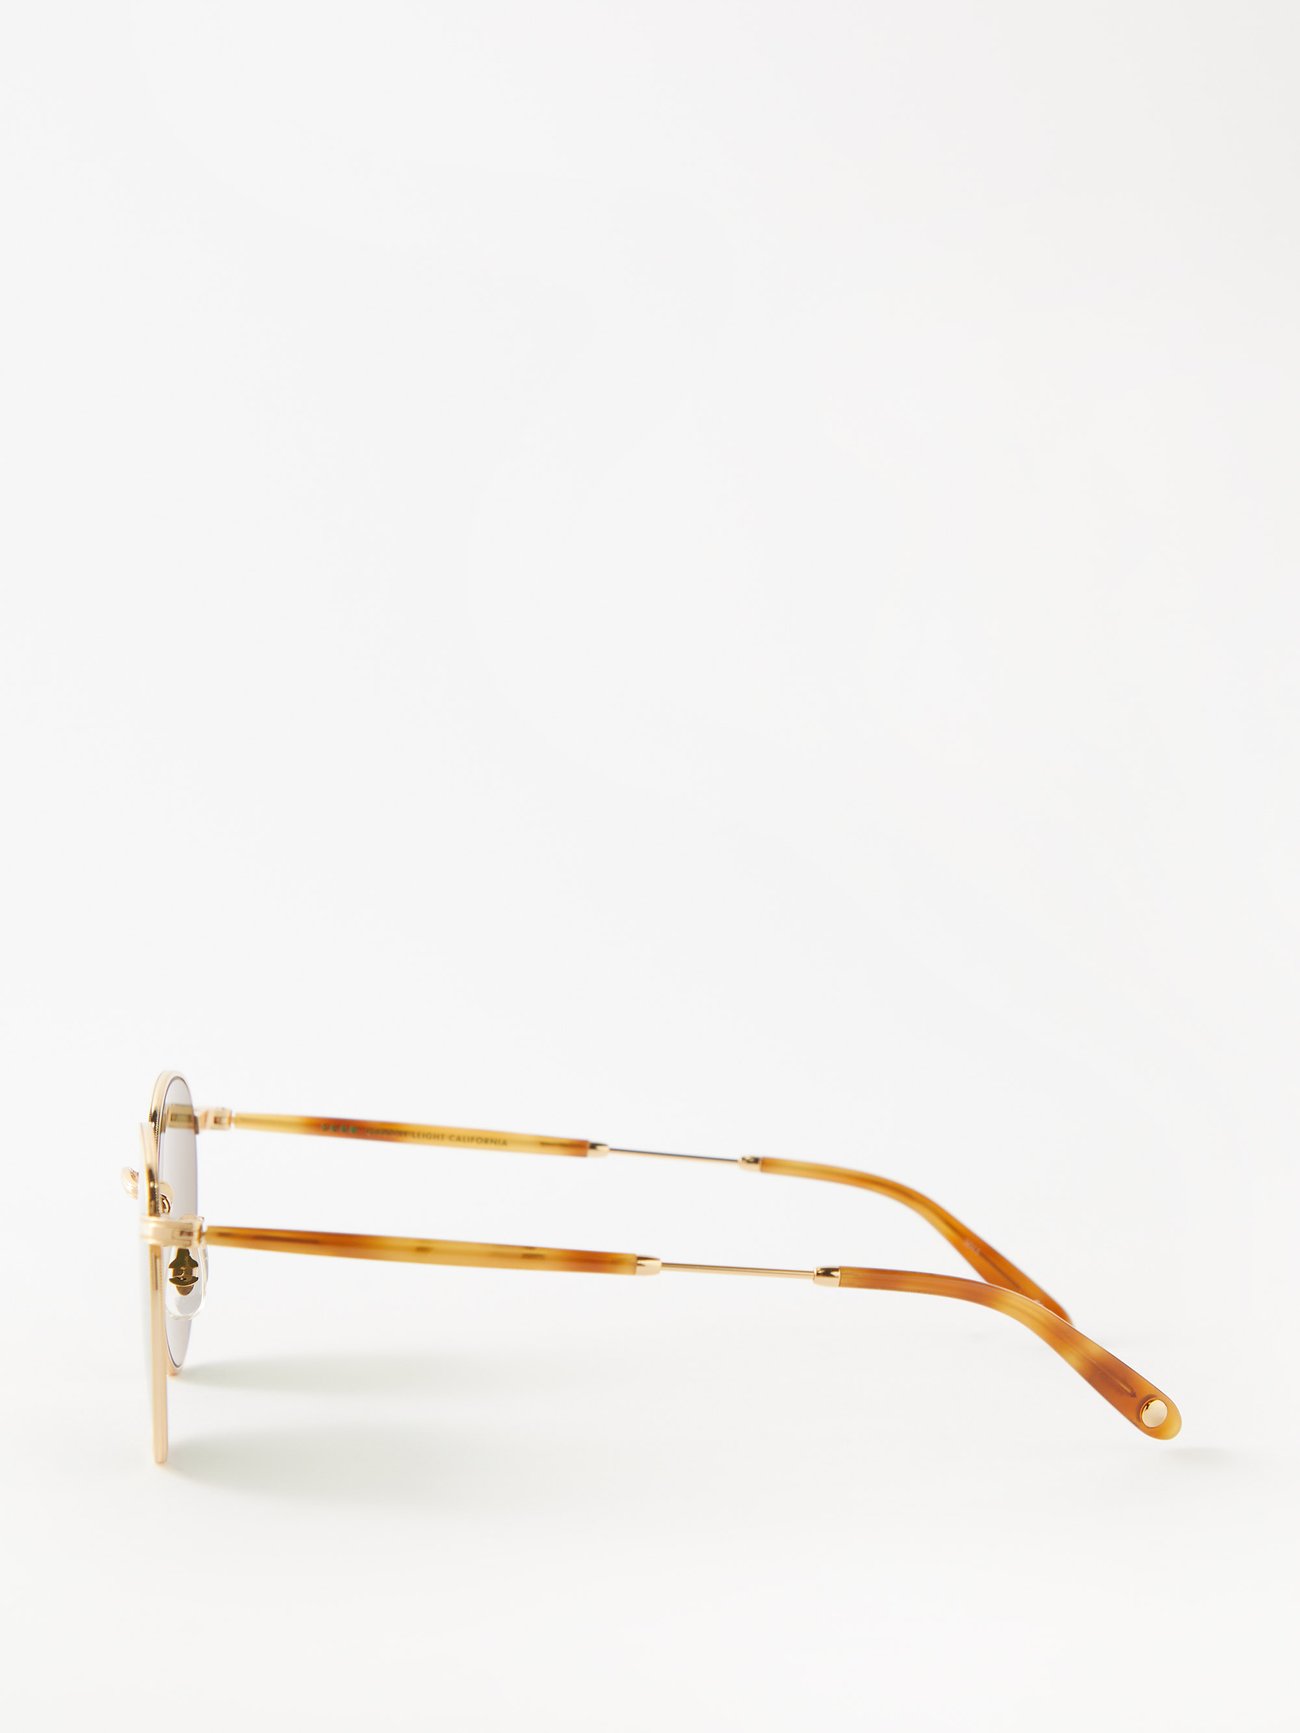 MATTISE Gold Unisex Polarized Sunglasses Made of Stainless Steel